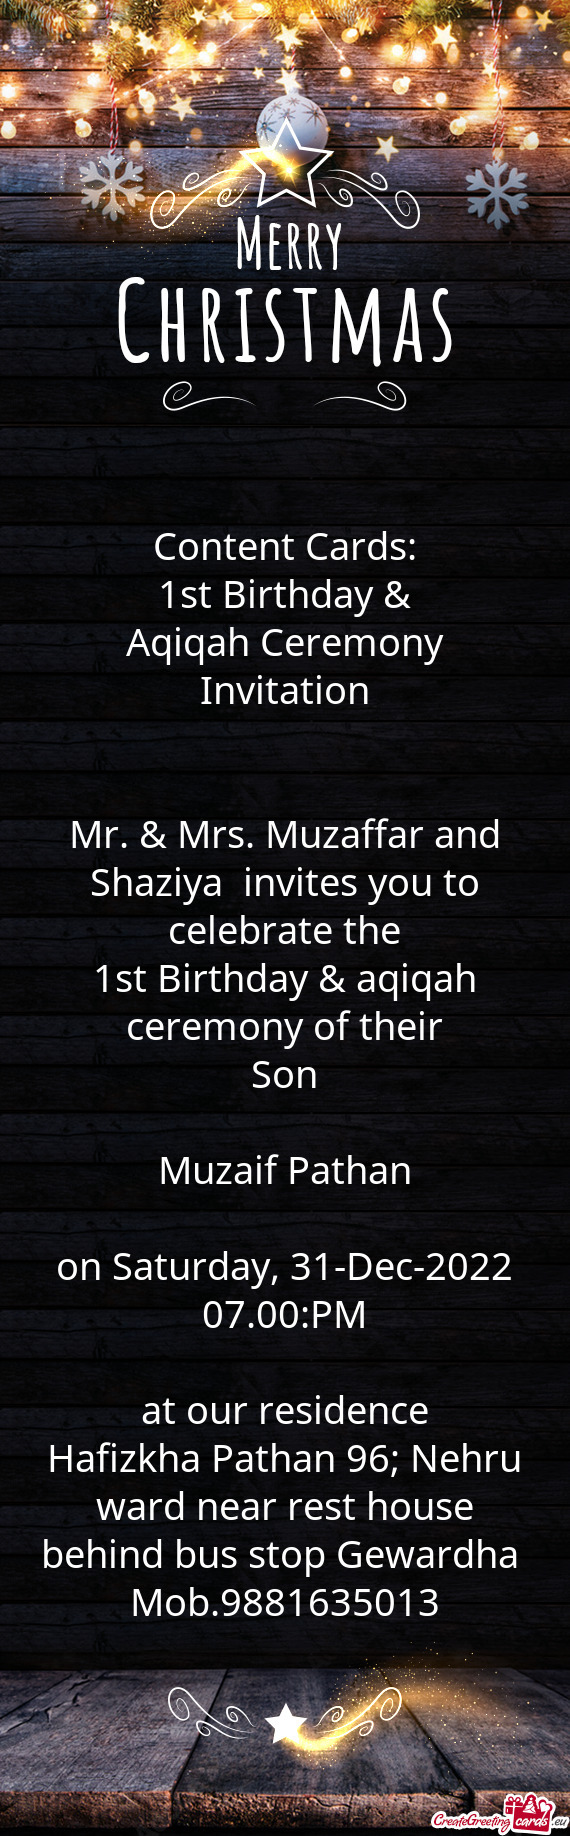 Mr. & Mrs. Muzaffar and Shaziya invites you to celebrate the